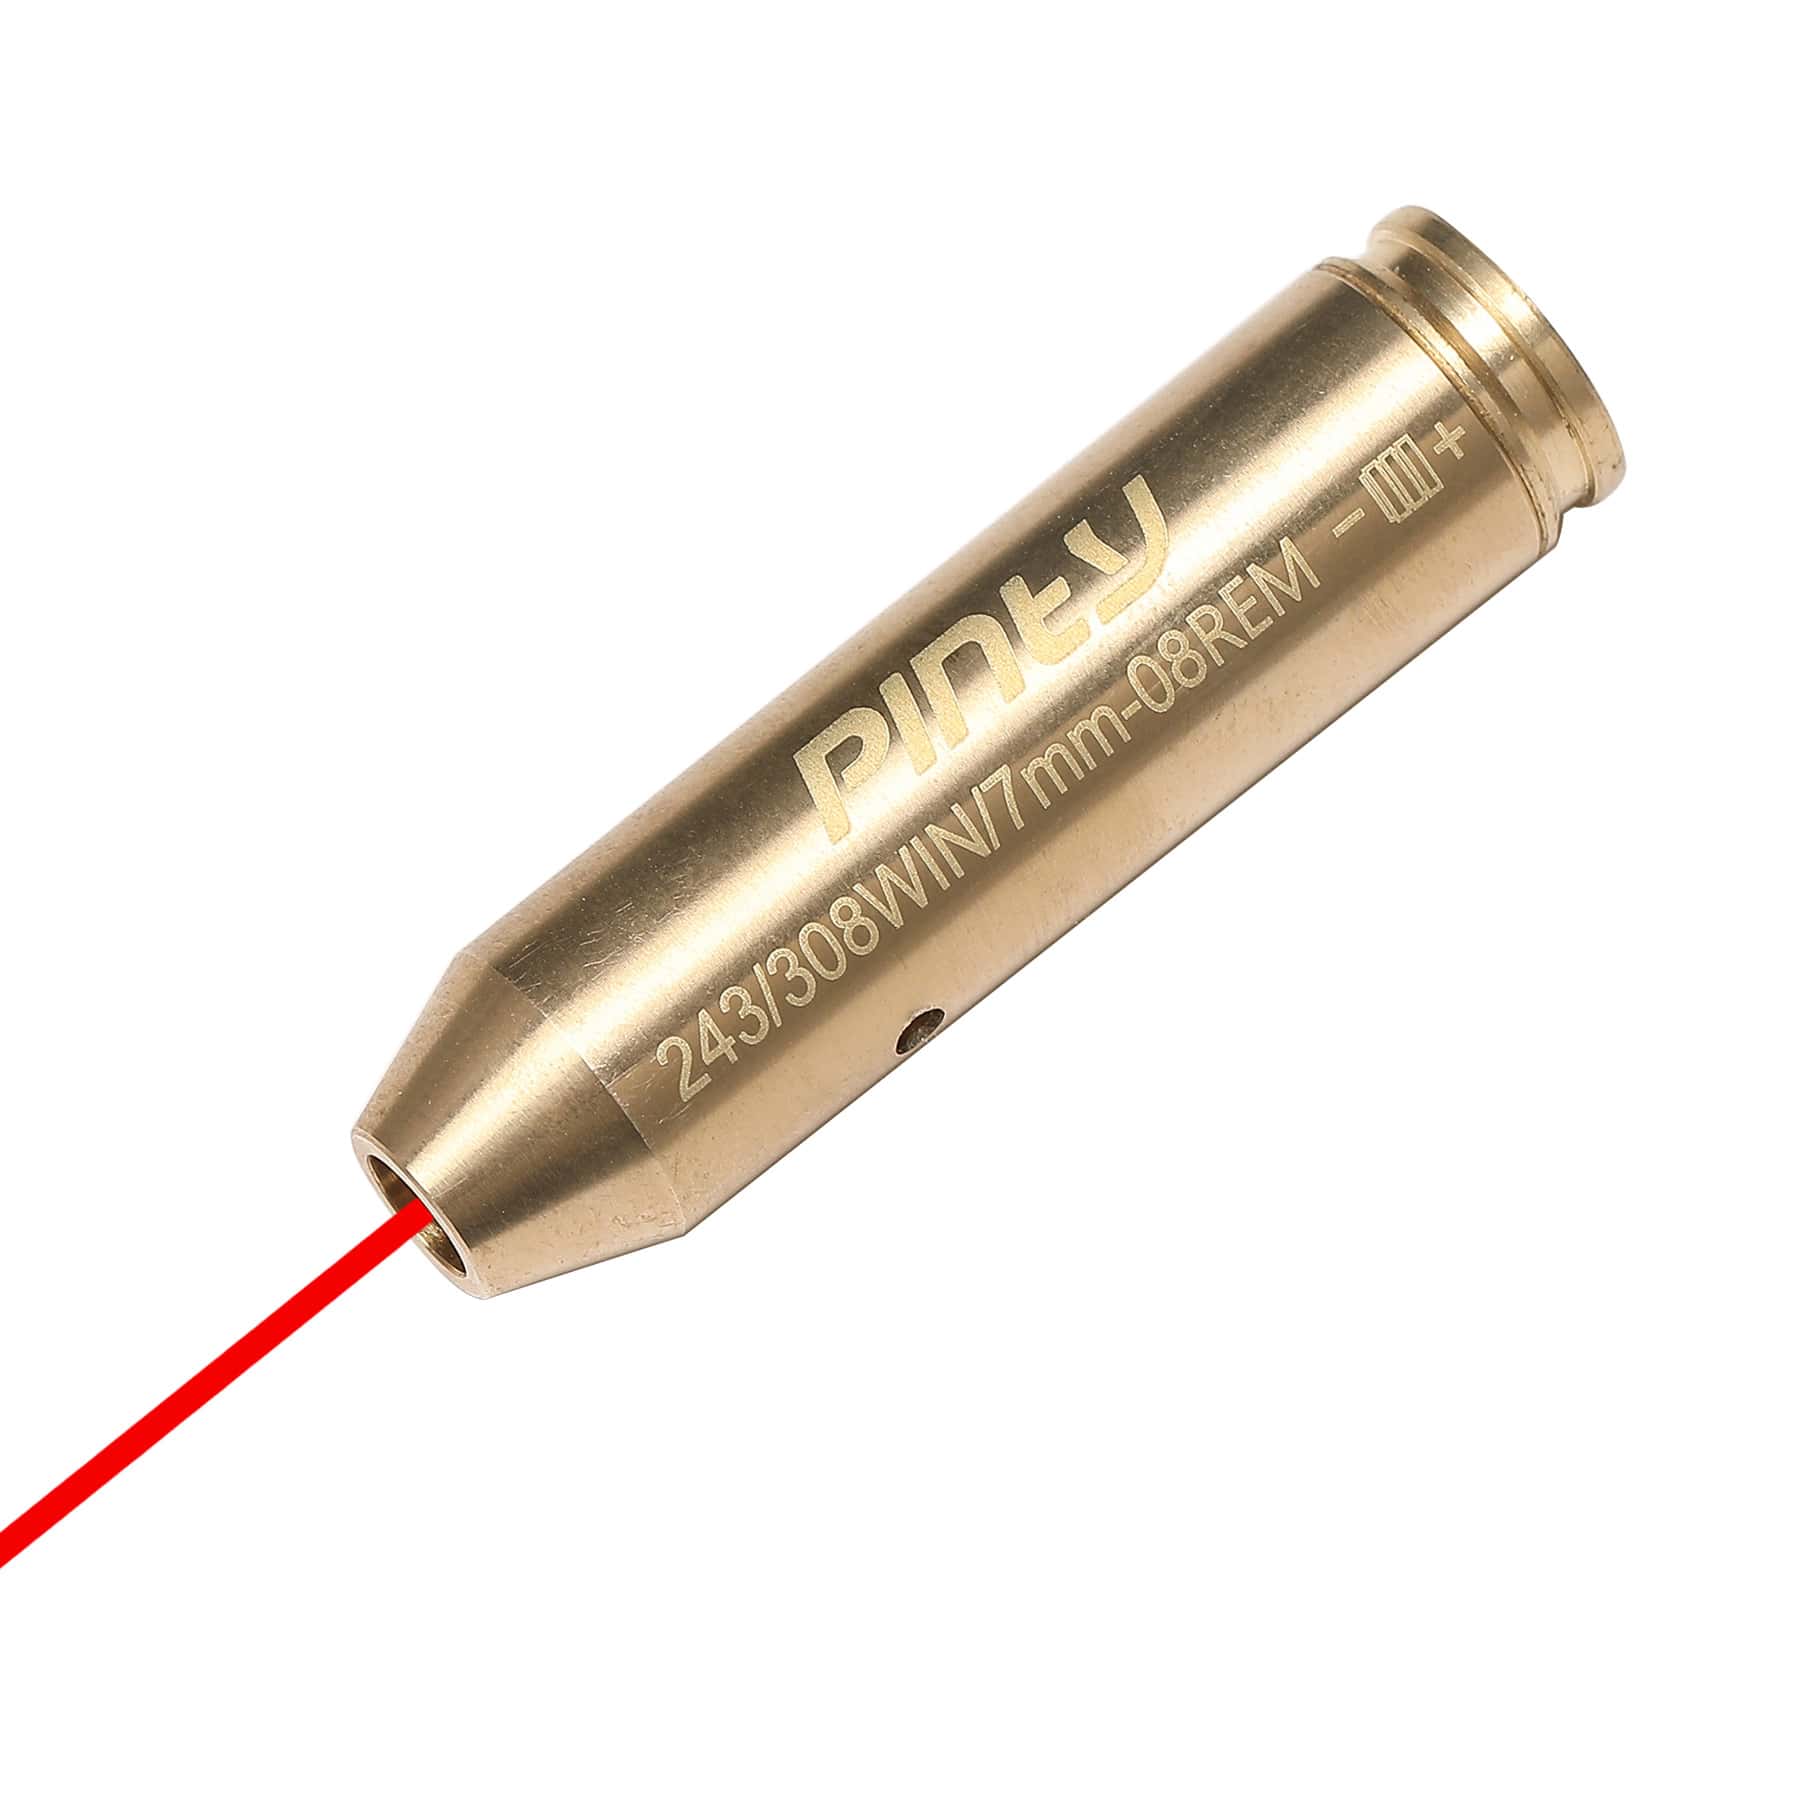 Bore Sighter-laser boresighter-best laser bore sight 